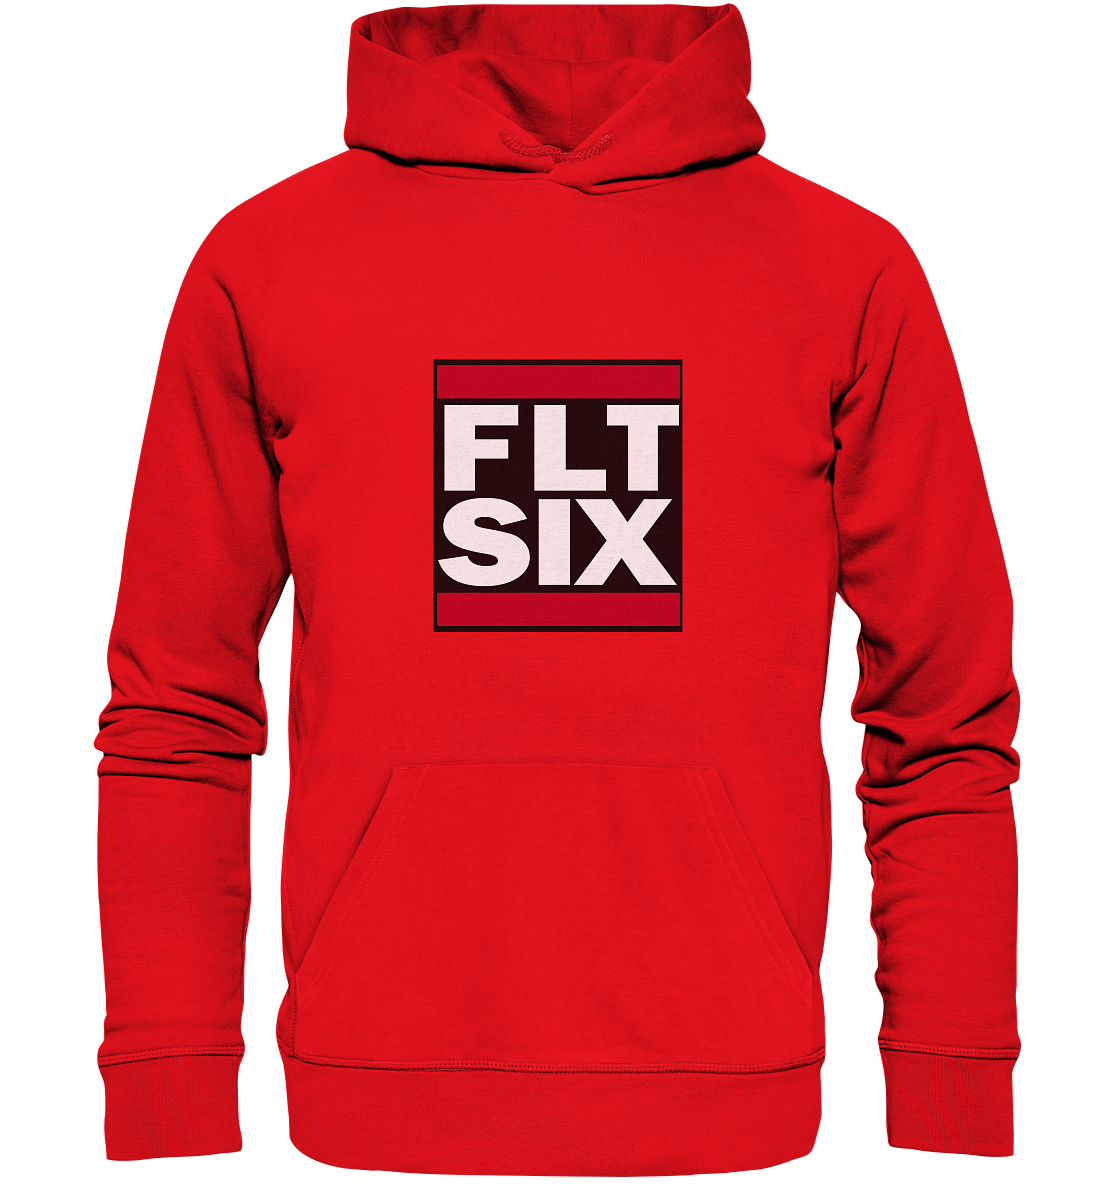 FLT SIX  - Organic Hoodie